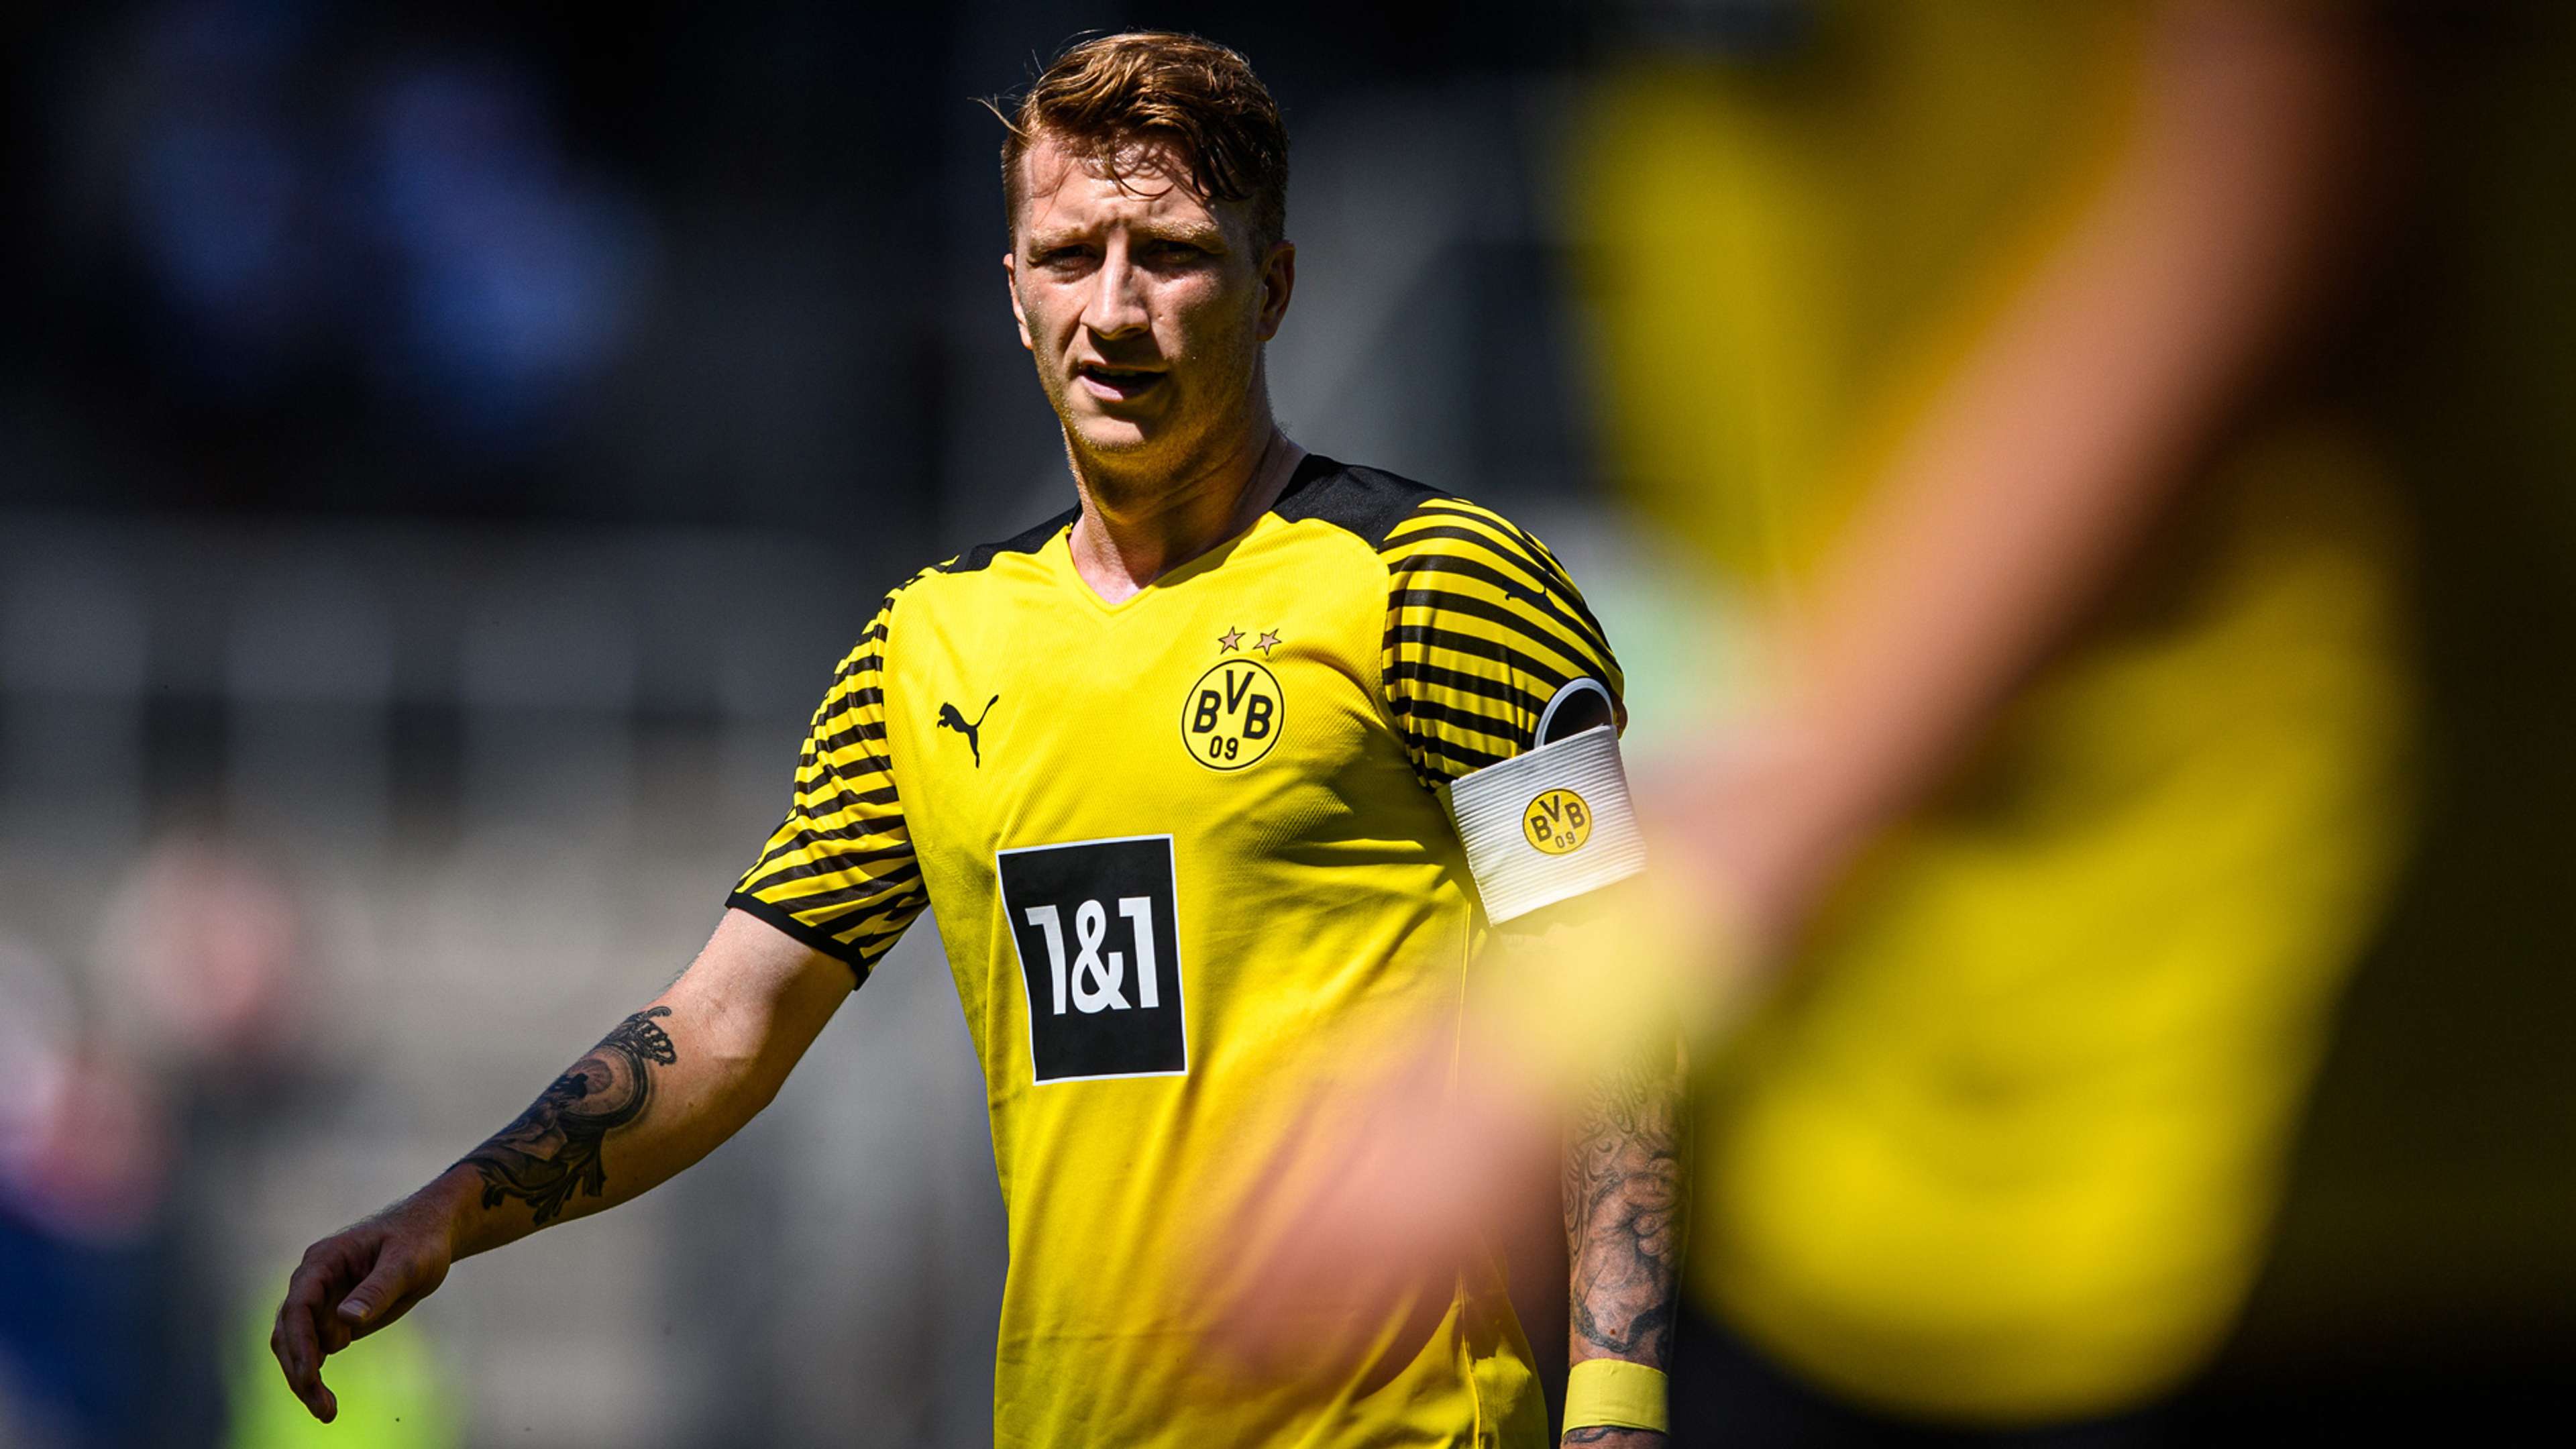 Marco Reus Borussia Dortmund 0721 2021/22